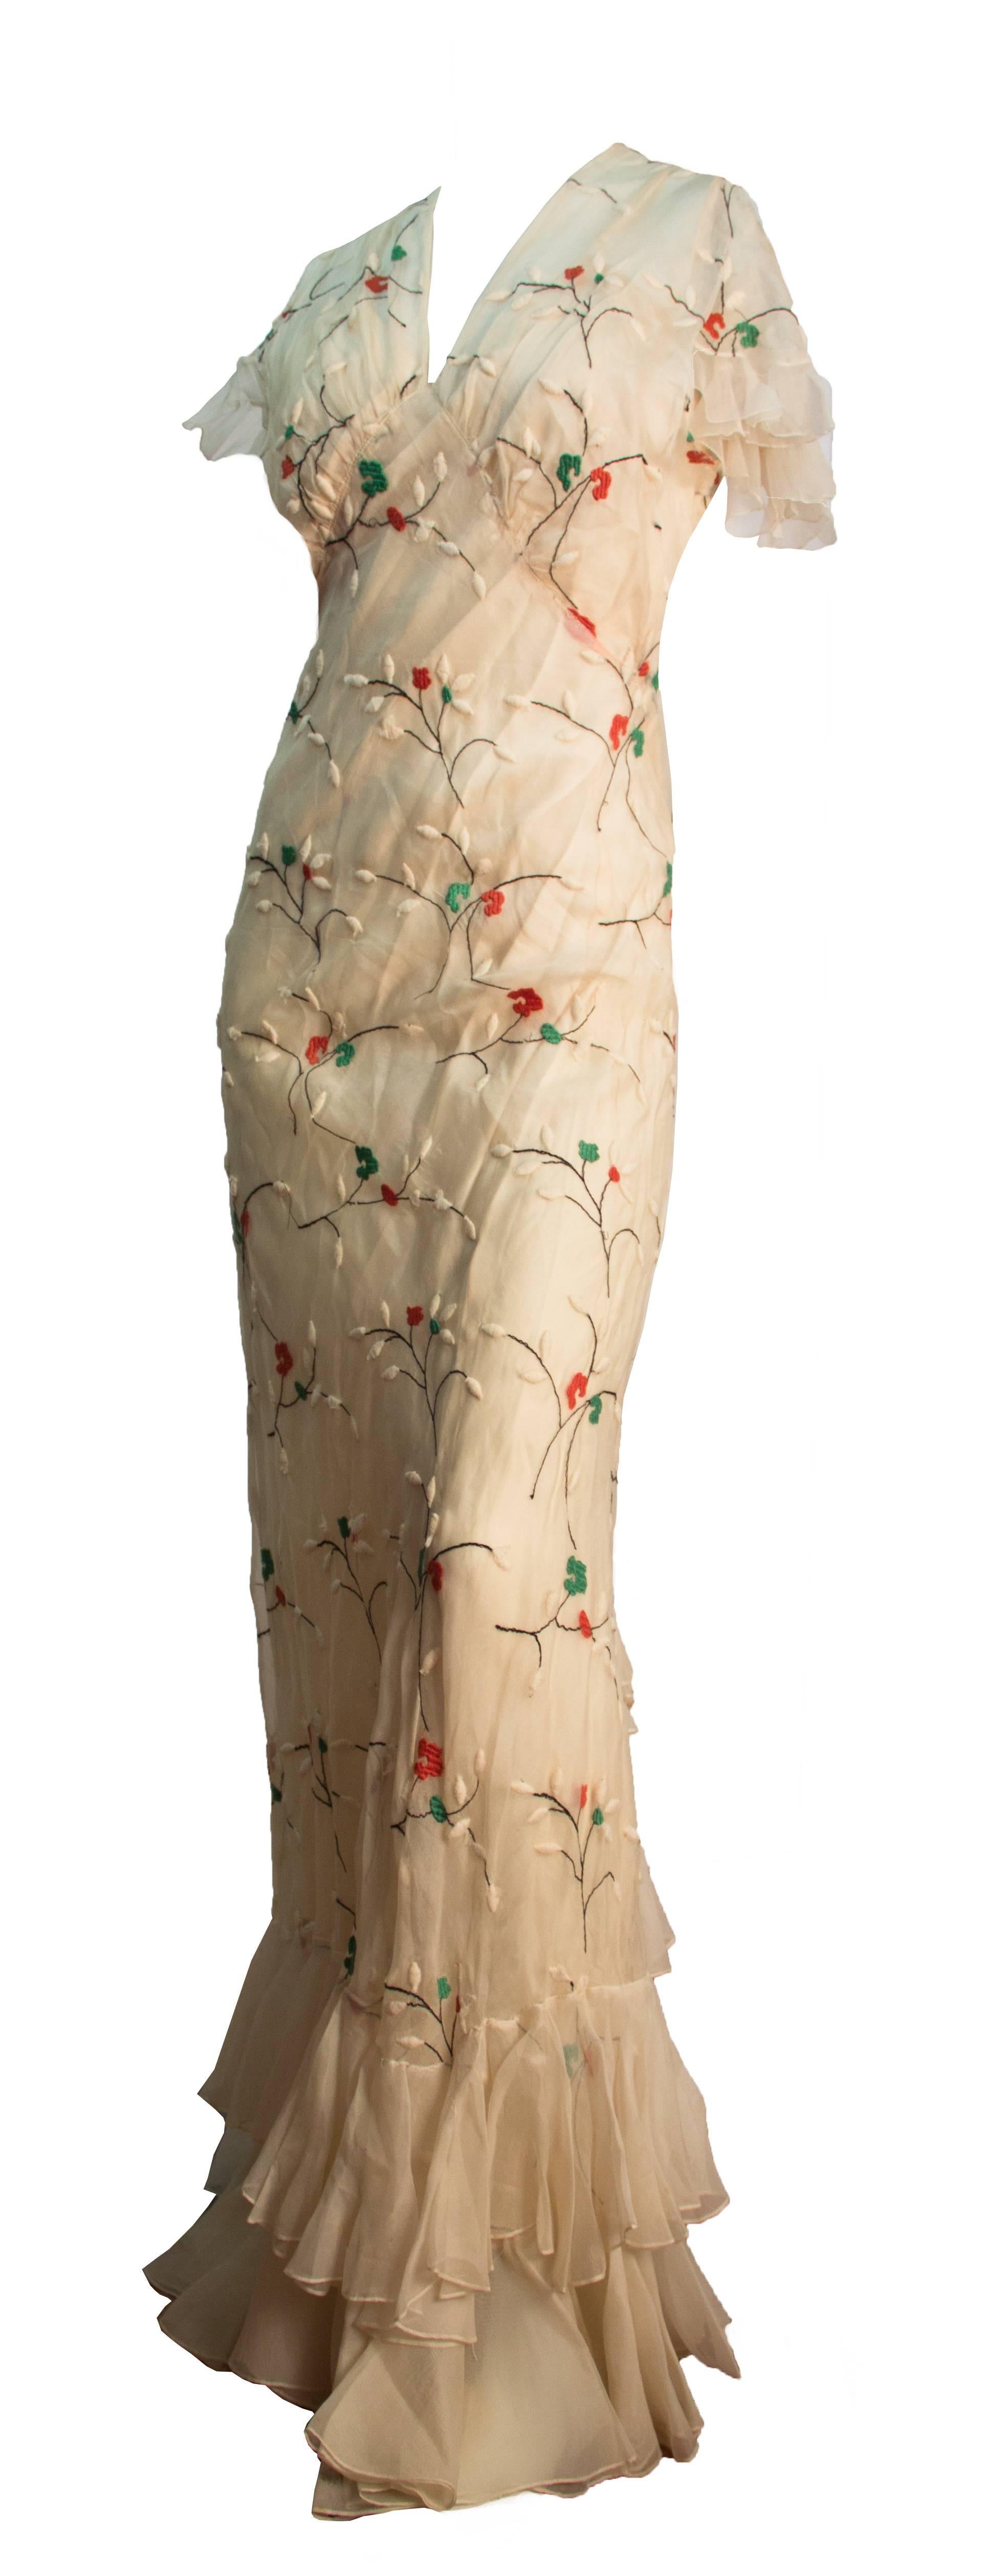 30s cream colored bias cut sheer silk dress with ruffle hem, trim and flutter sleeves. Floral embroidery. Original bias cut slip.

 